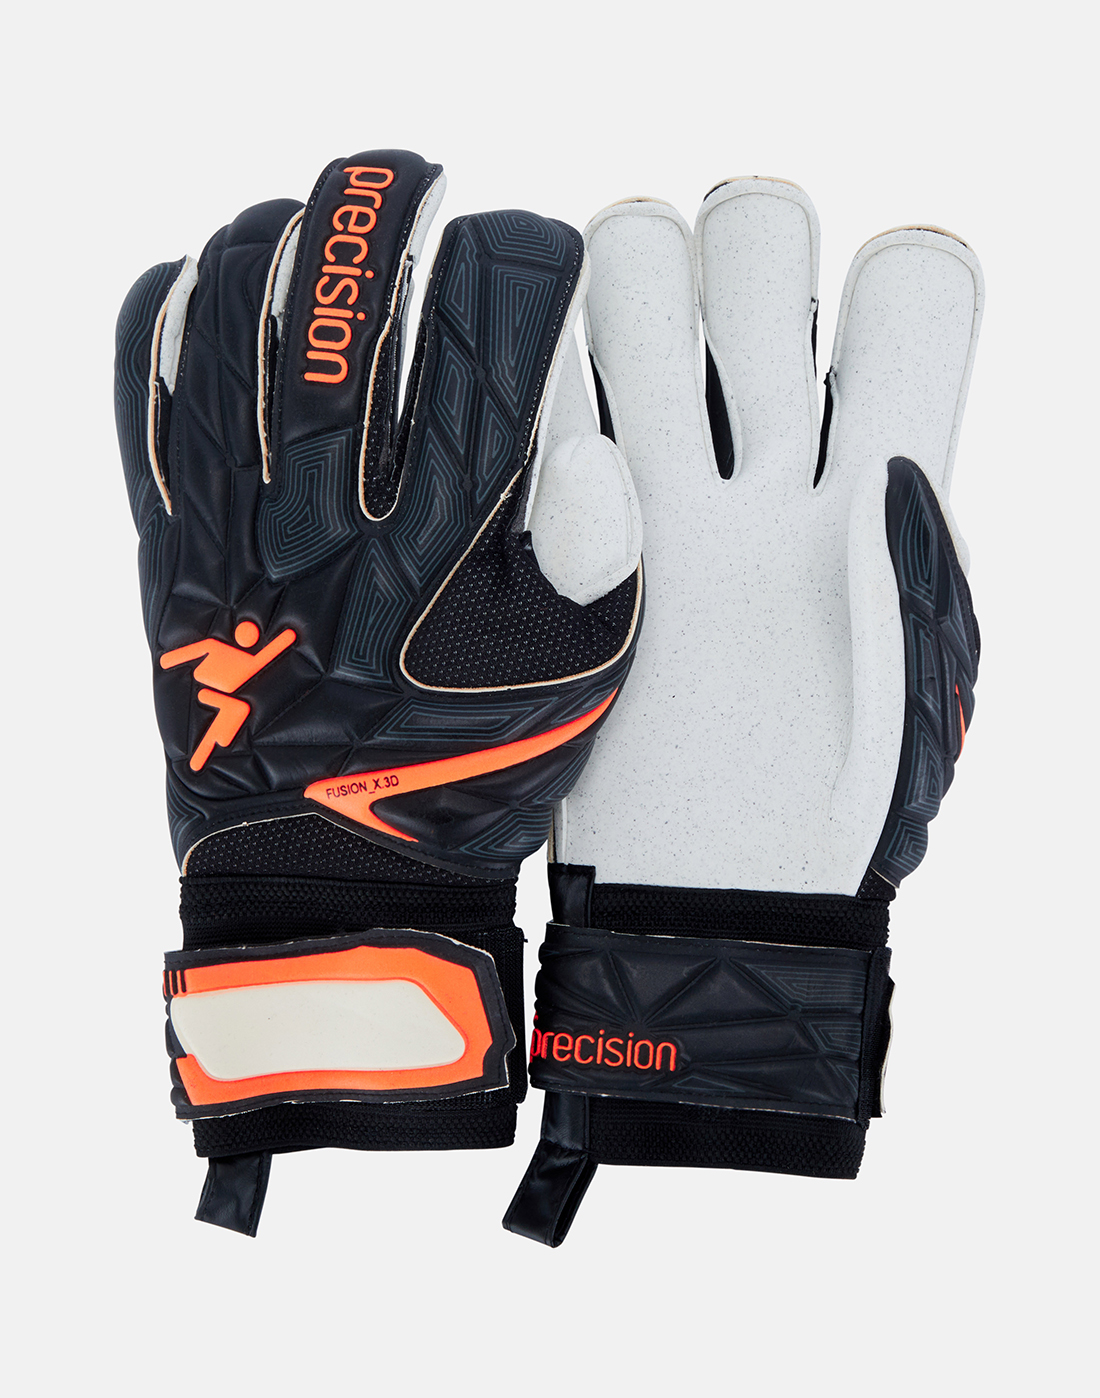 Precision GK Fusion-X Quartz Surround Grip Goalkeeper Gloves Size 